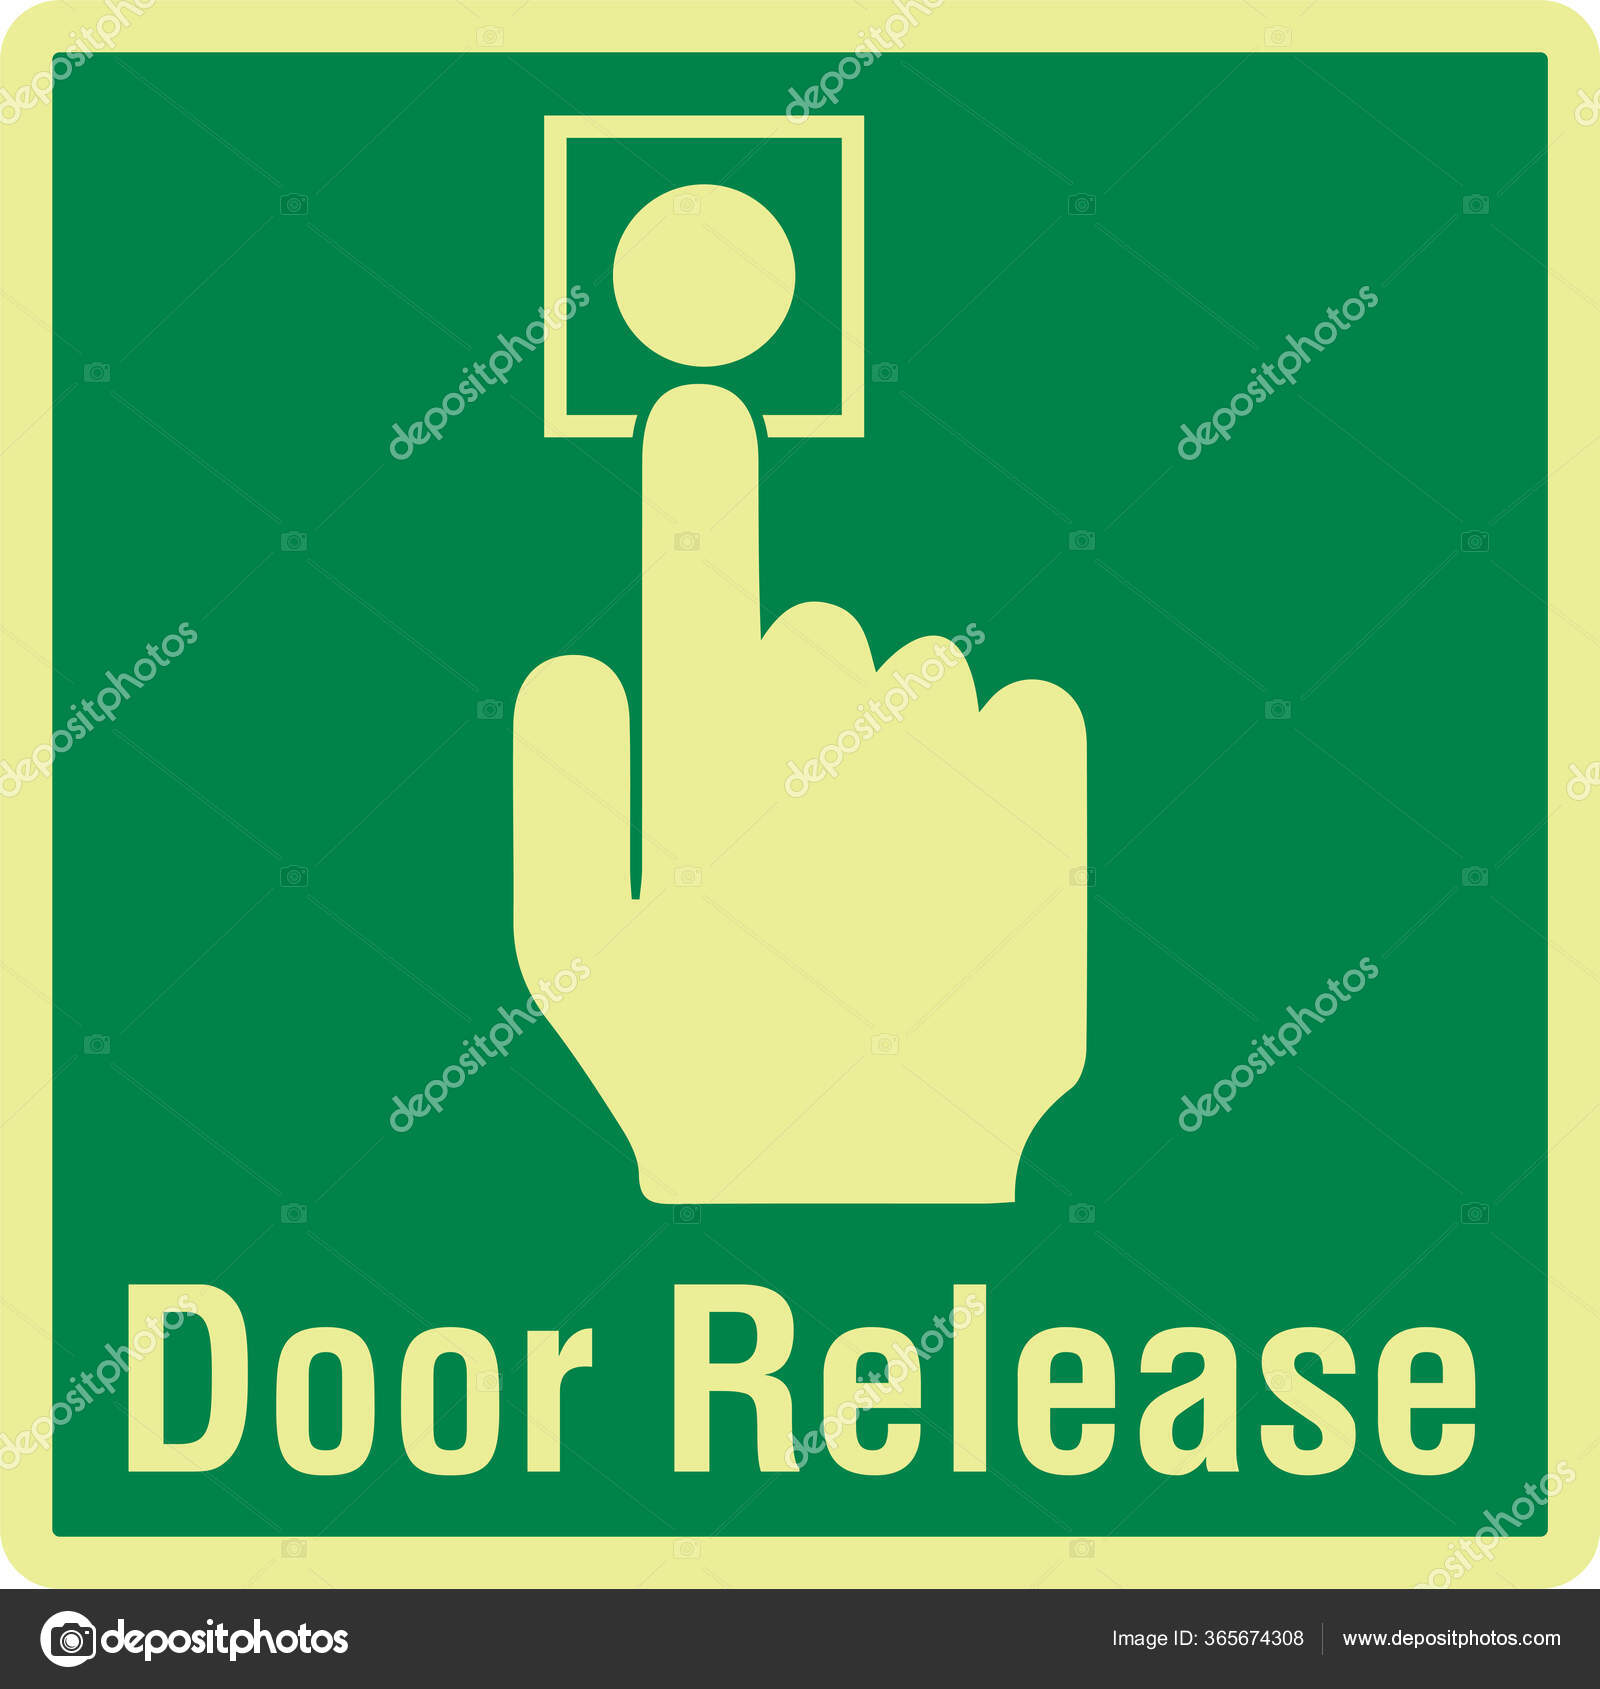 https://st3.depositphotos.com/34526442/36567/v/1600/depositphotos_365674308-stock-illustration-door-release-button-green-sign.jpg